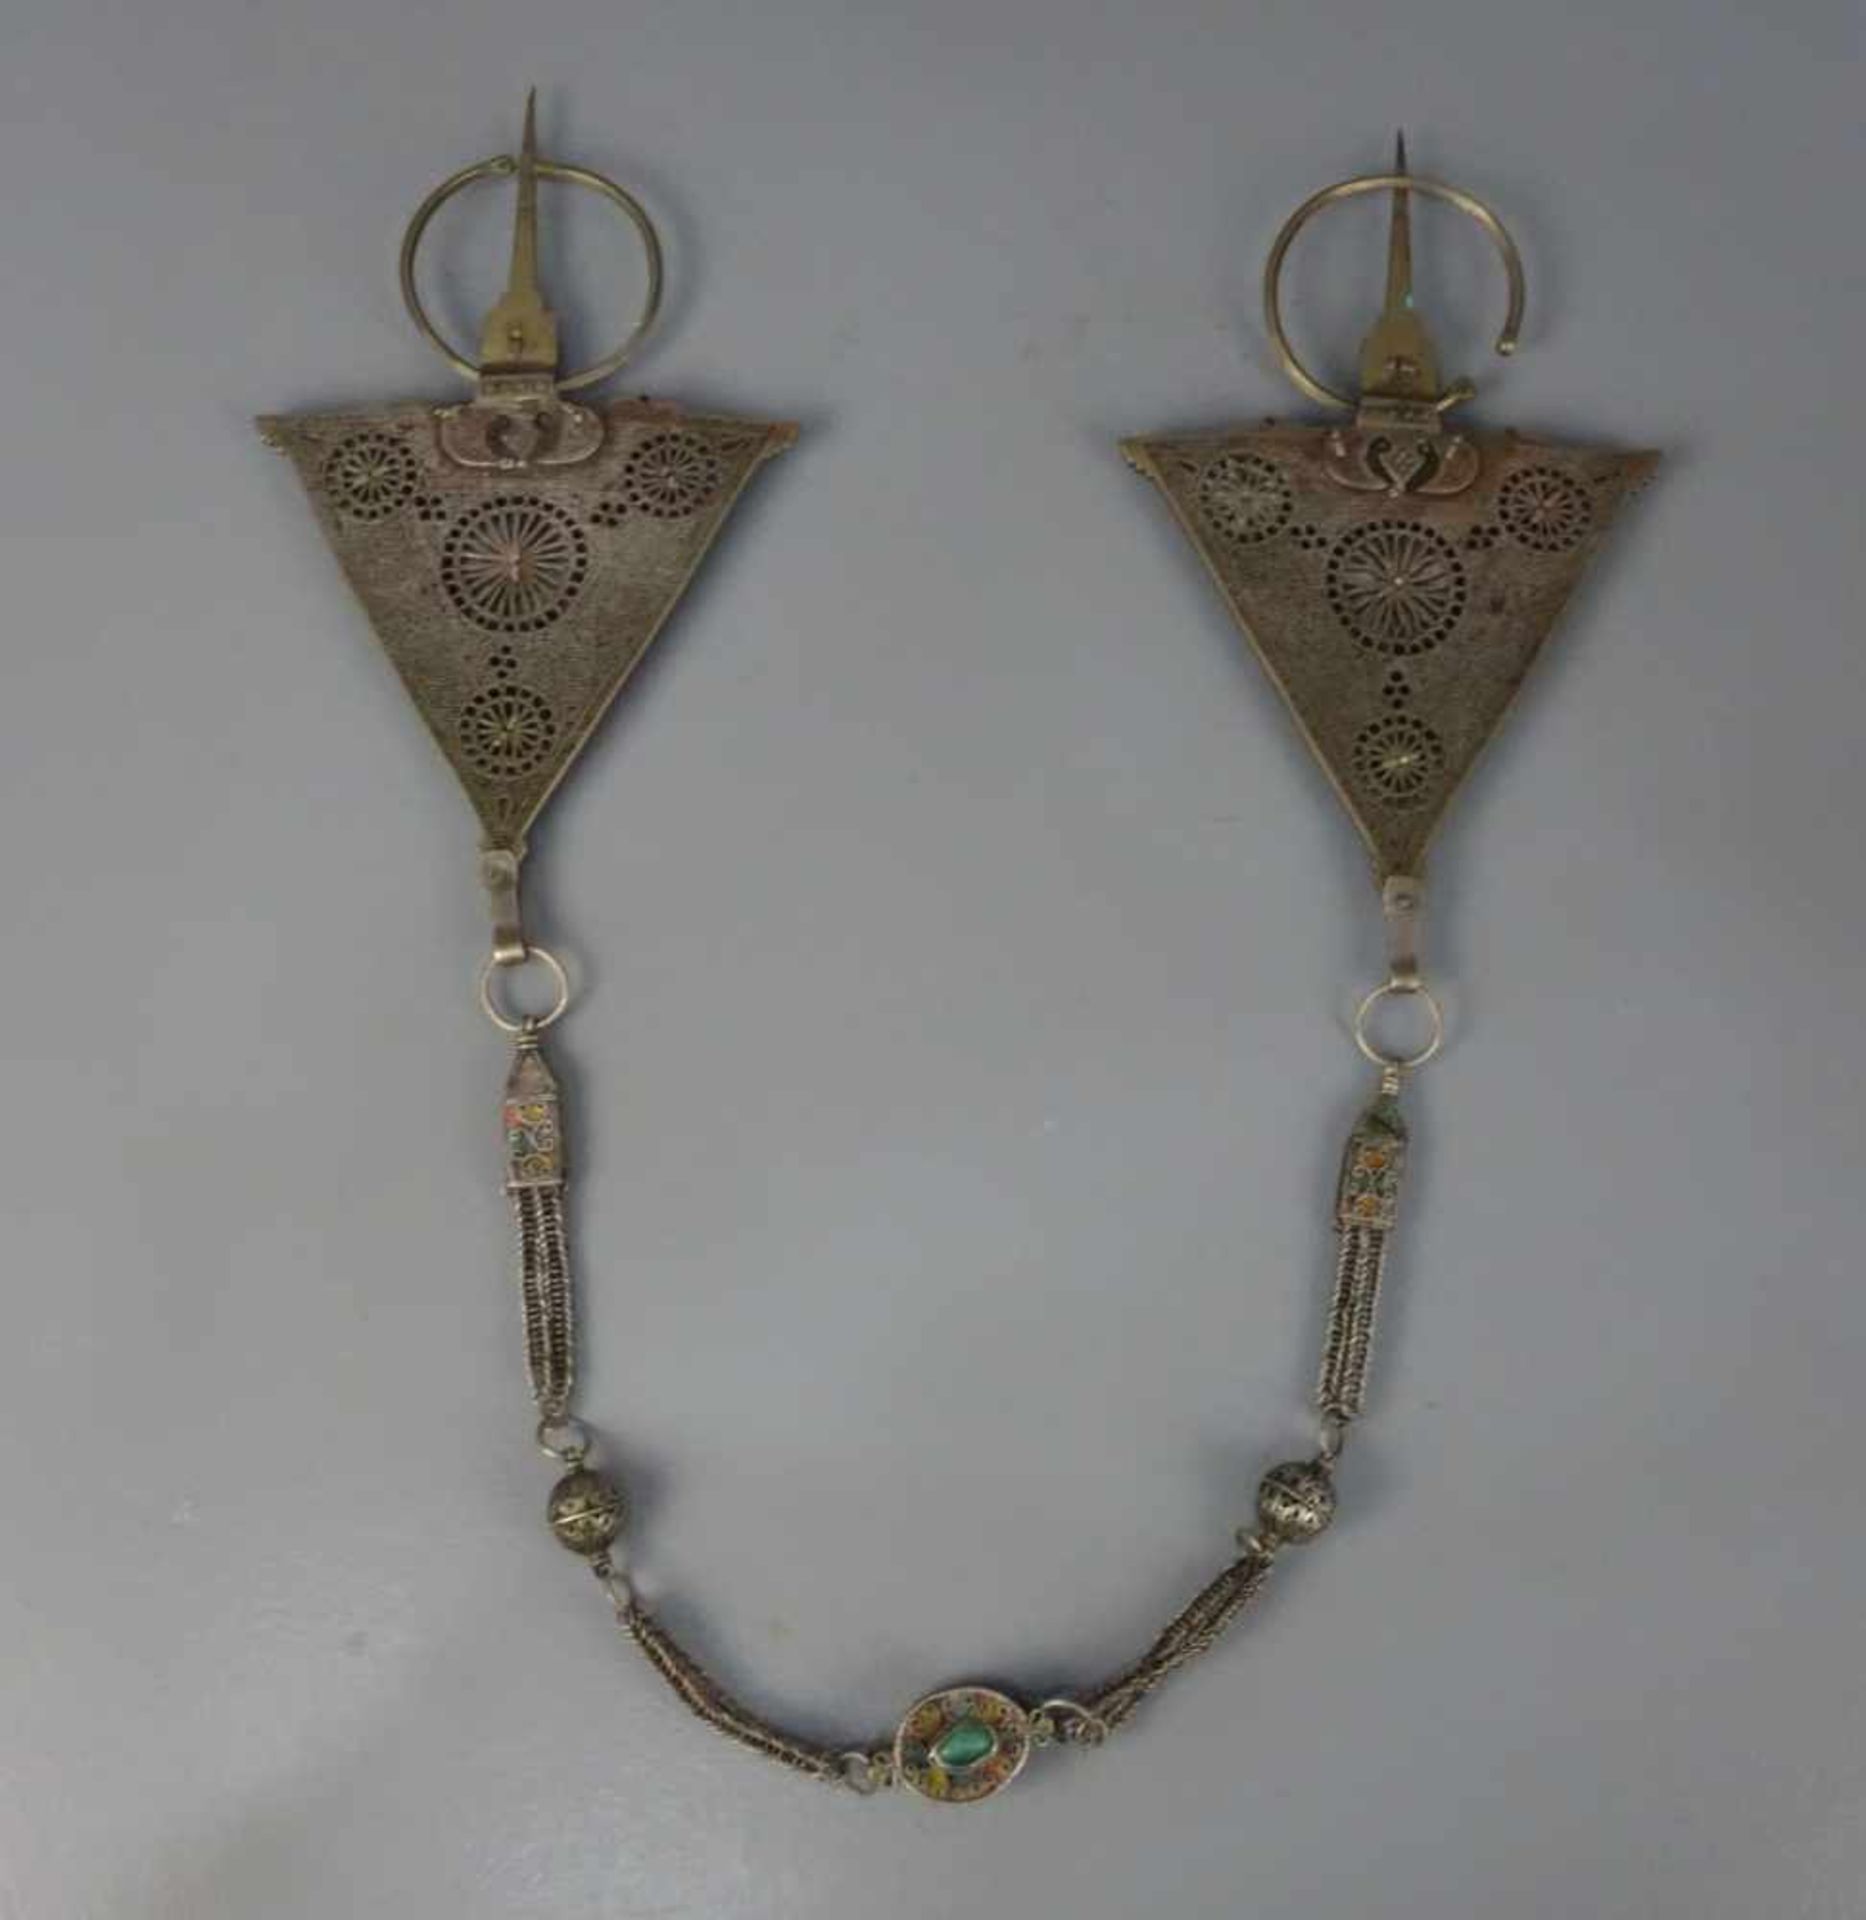 BERBER-SCHMUCK: KETTE / oriental necklace, Tata / Marokko, wohl Silber, Glas und wohl Amazonit ( - Image 2 of 2